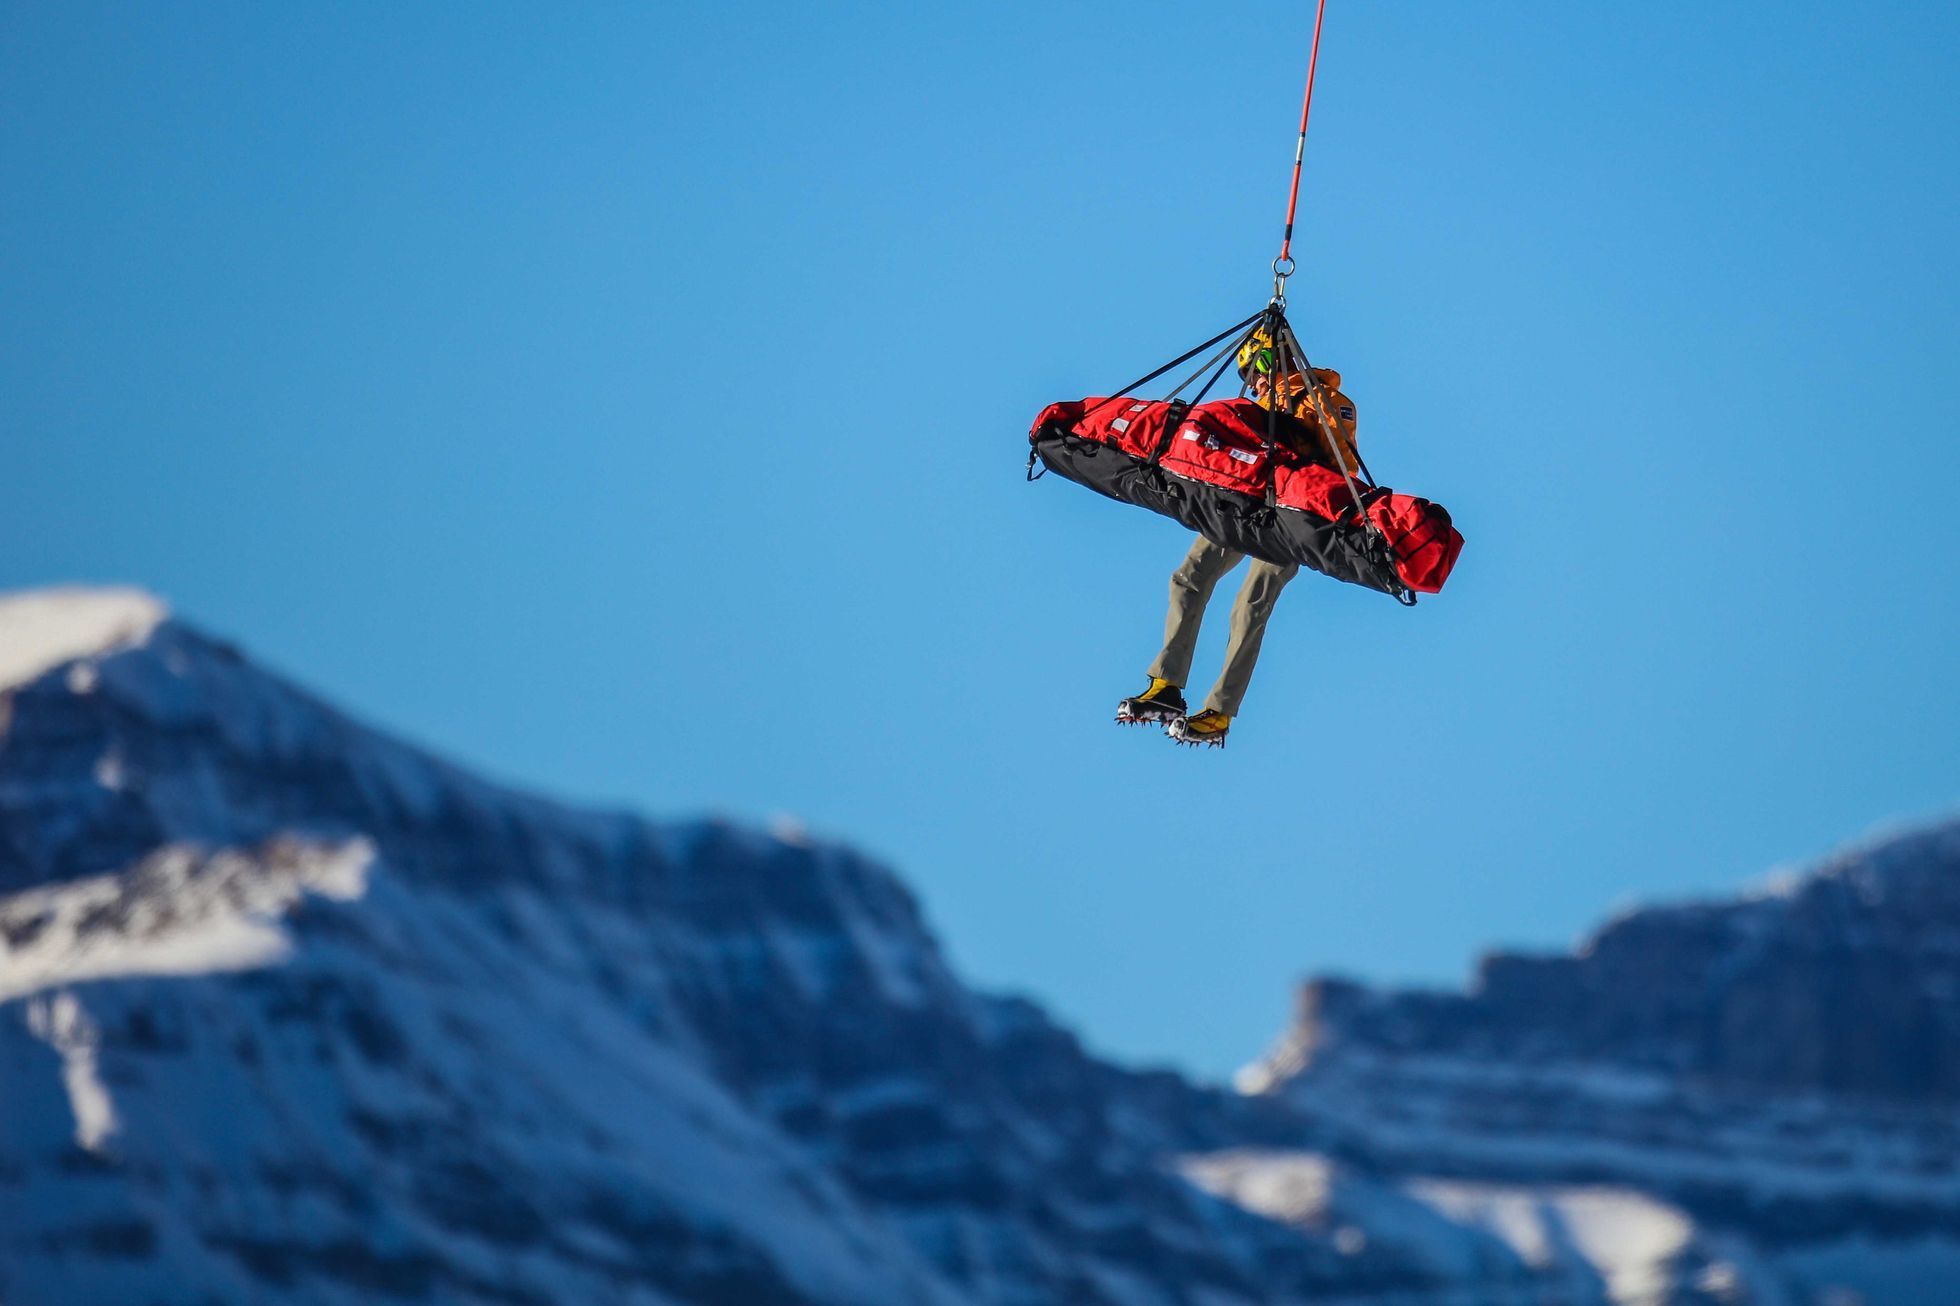 Alpine Skiing: Audi FIS Lake Louise Alpine Ski World Cup - men's downhill